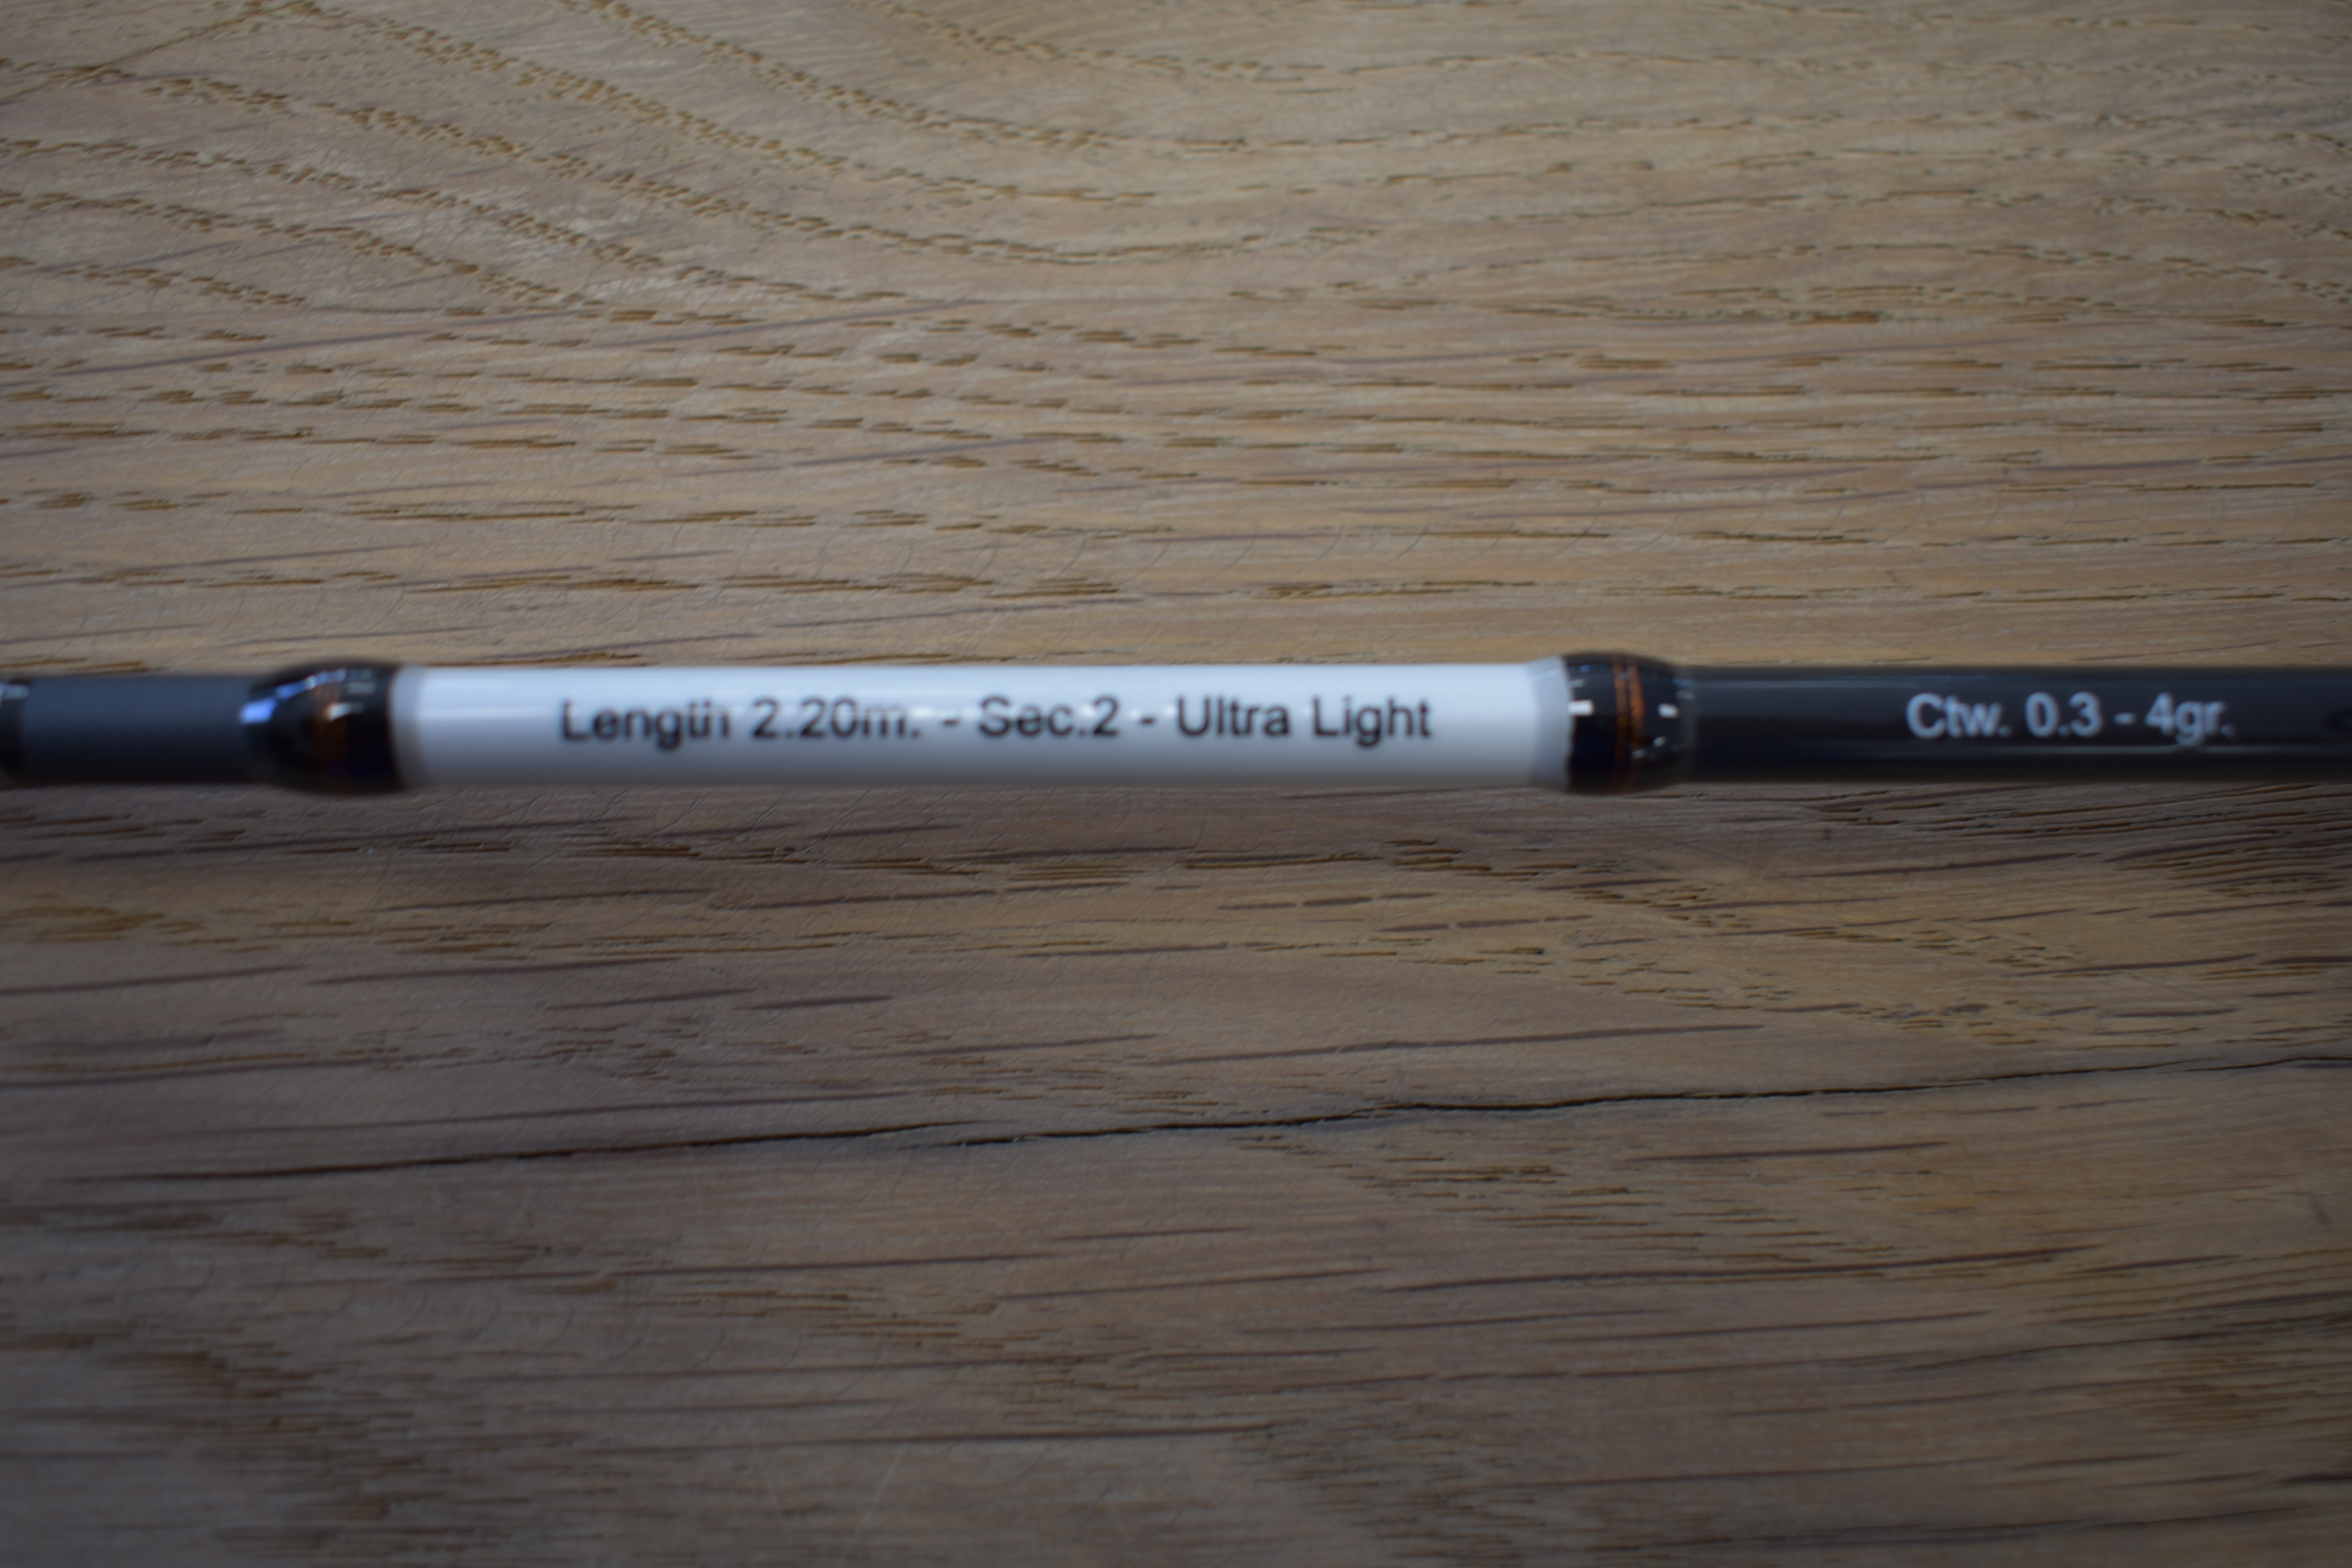 Forelshop Predox lenght 2.20m 0.3 - 4 gr ultra light